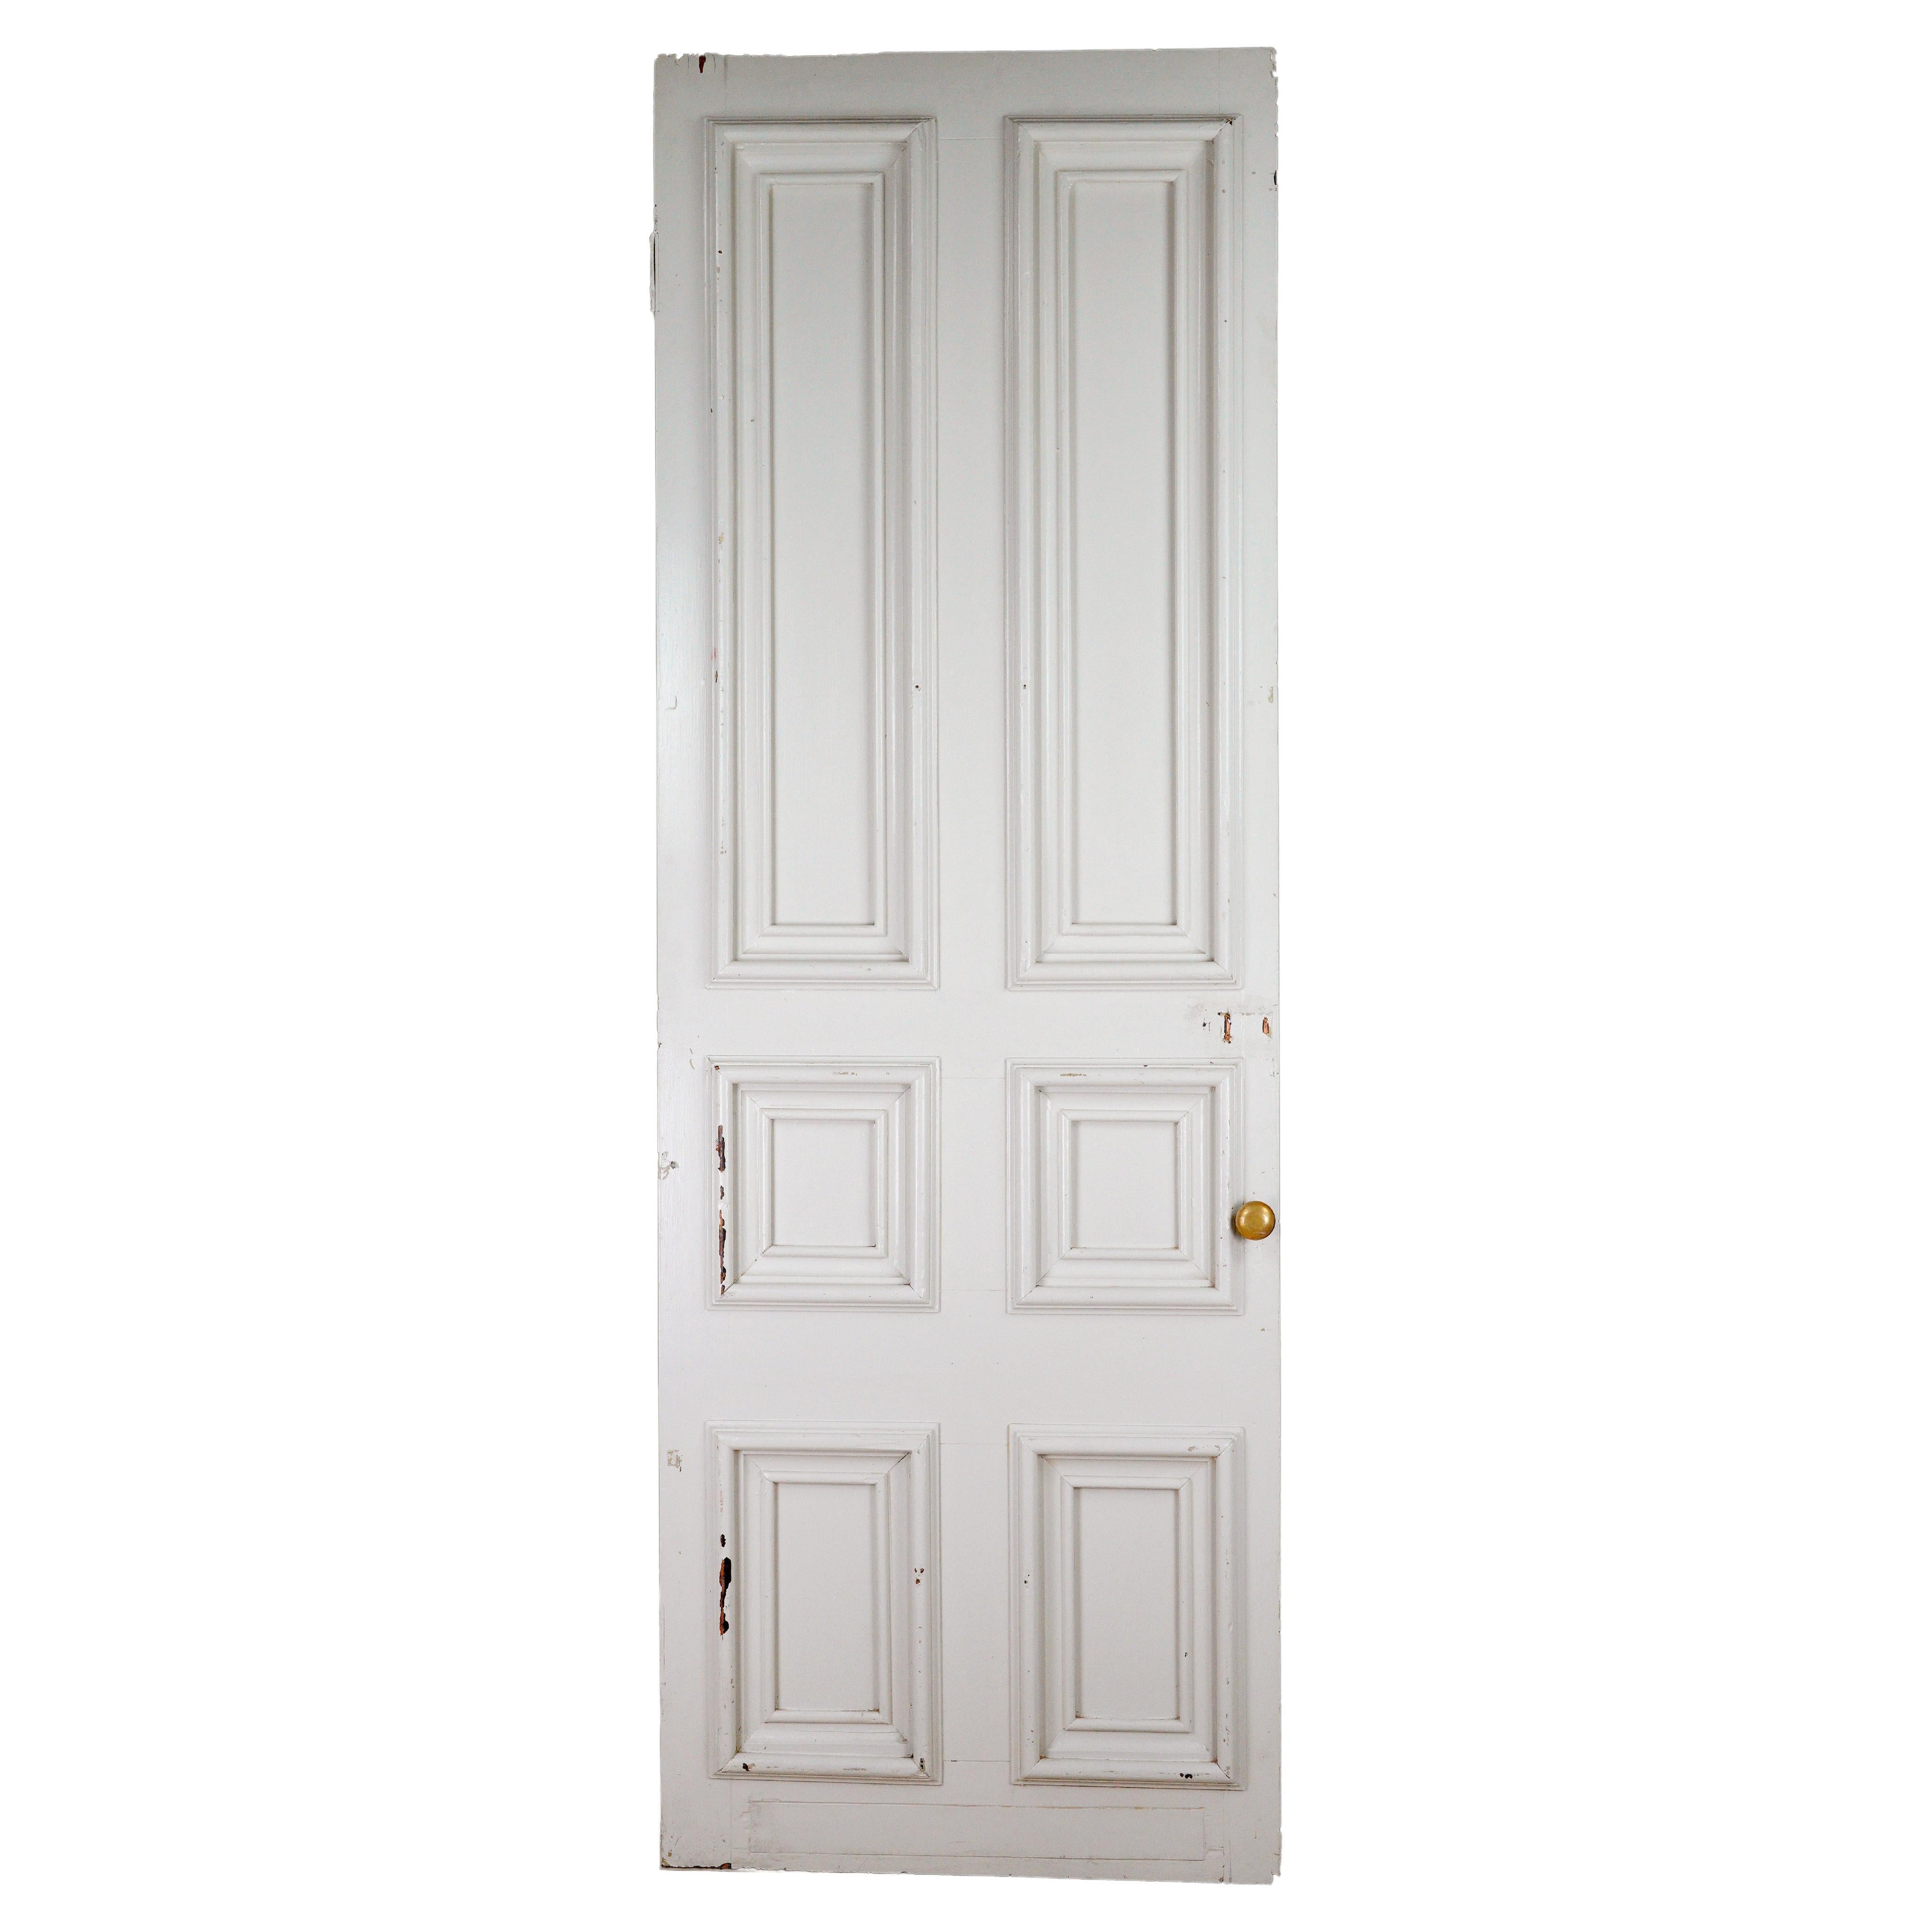 6 Pane White Pine Vent Passage Door 104.625 x 35.875 For Sale